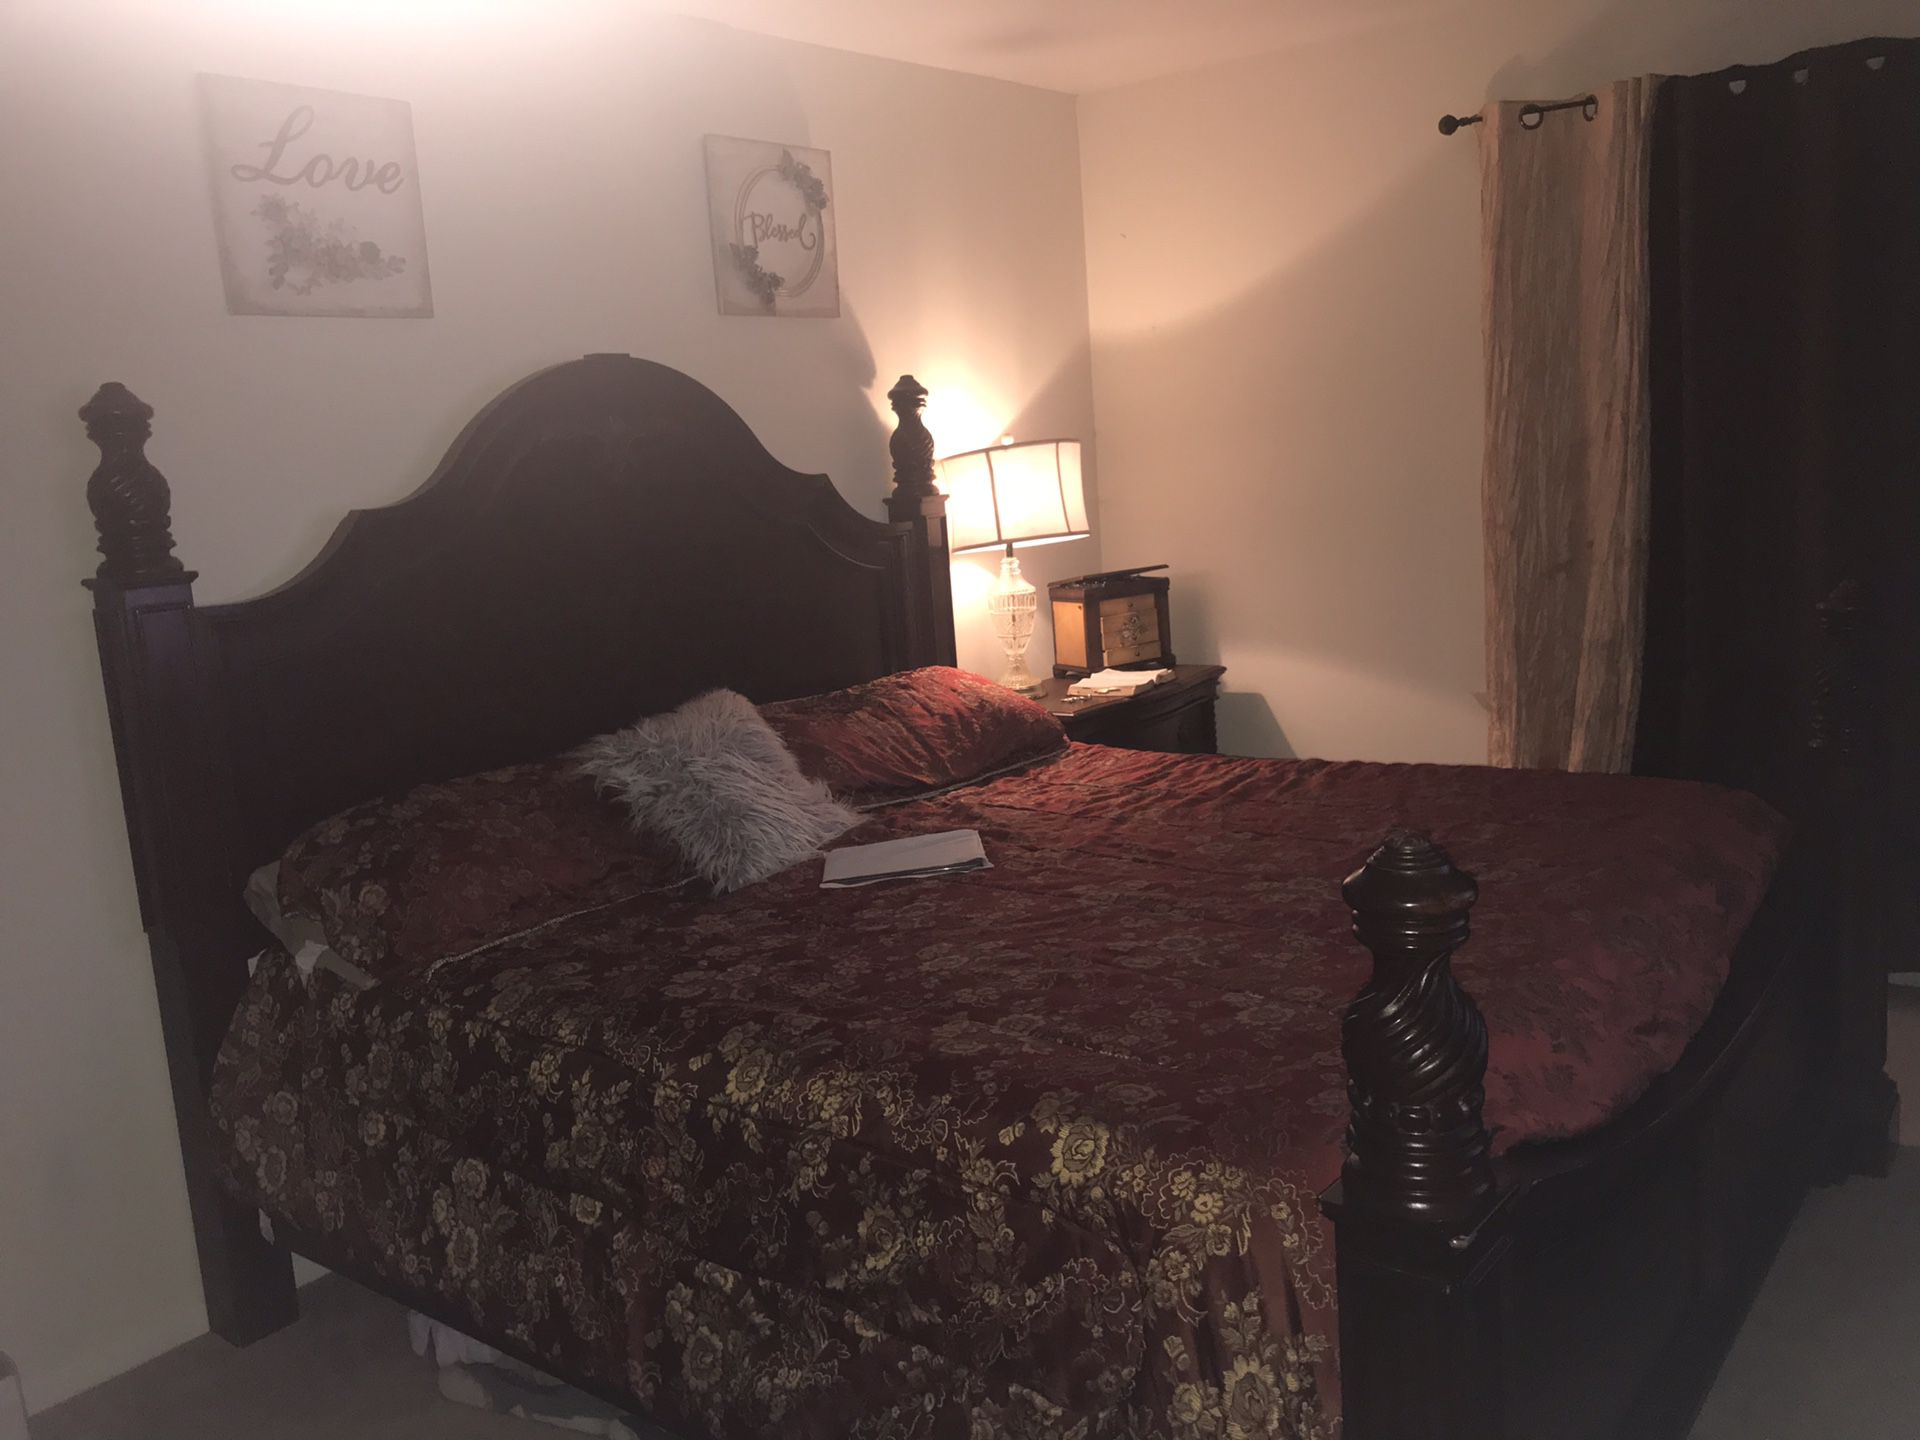 King set bedroom set with foam mattress